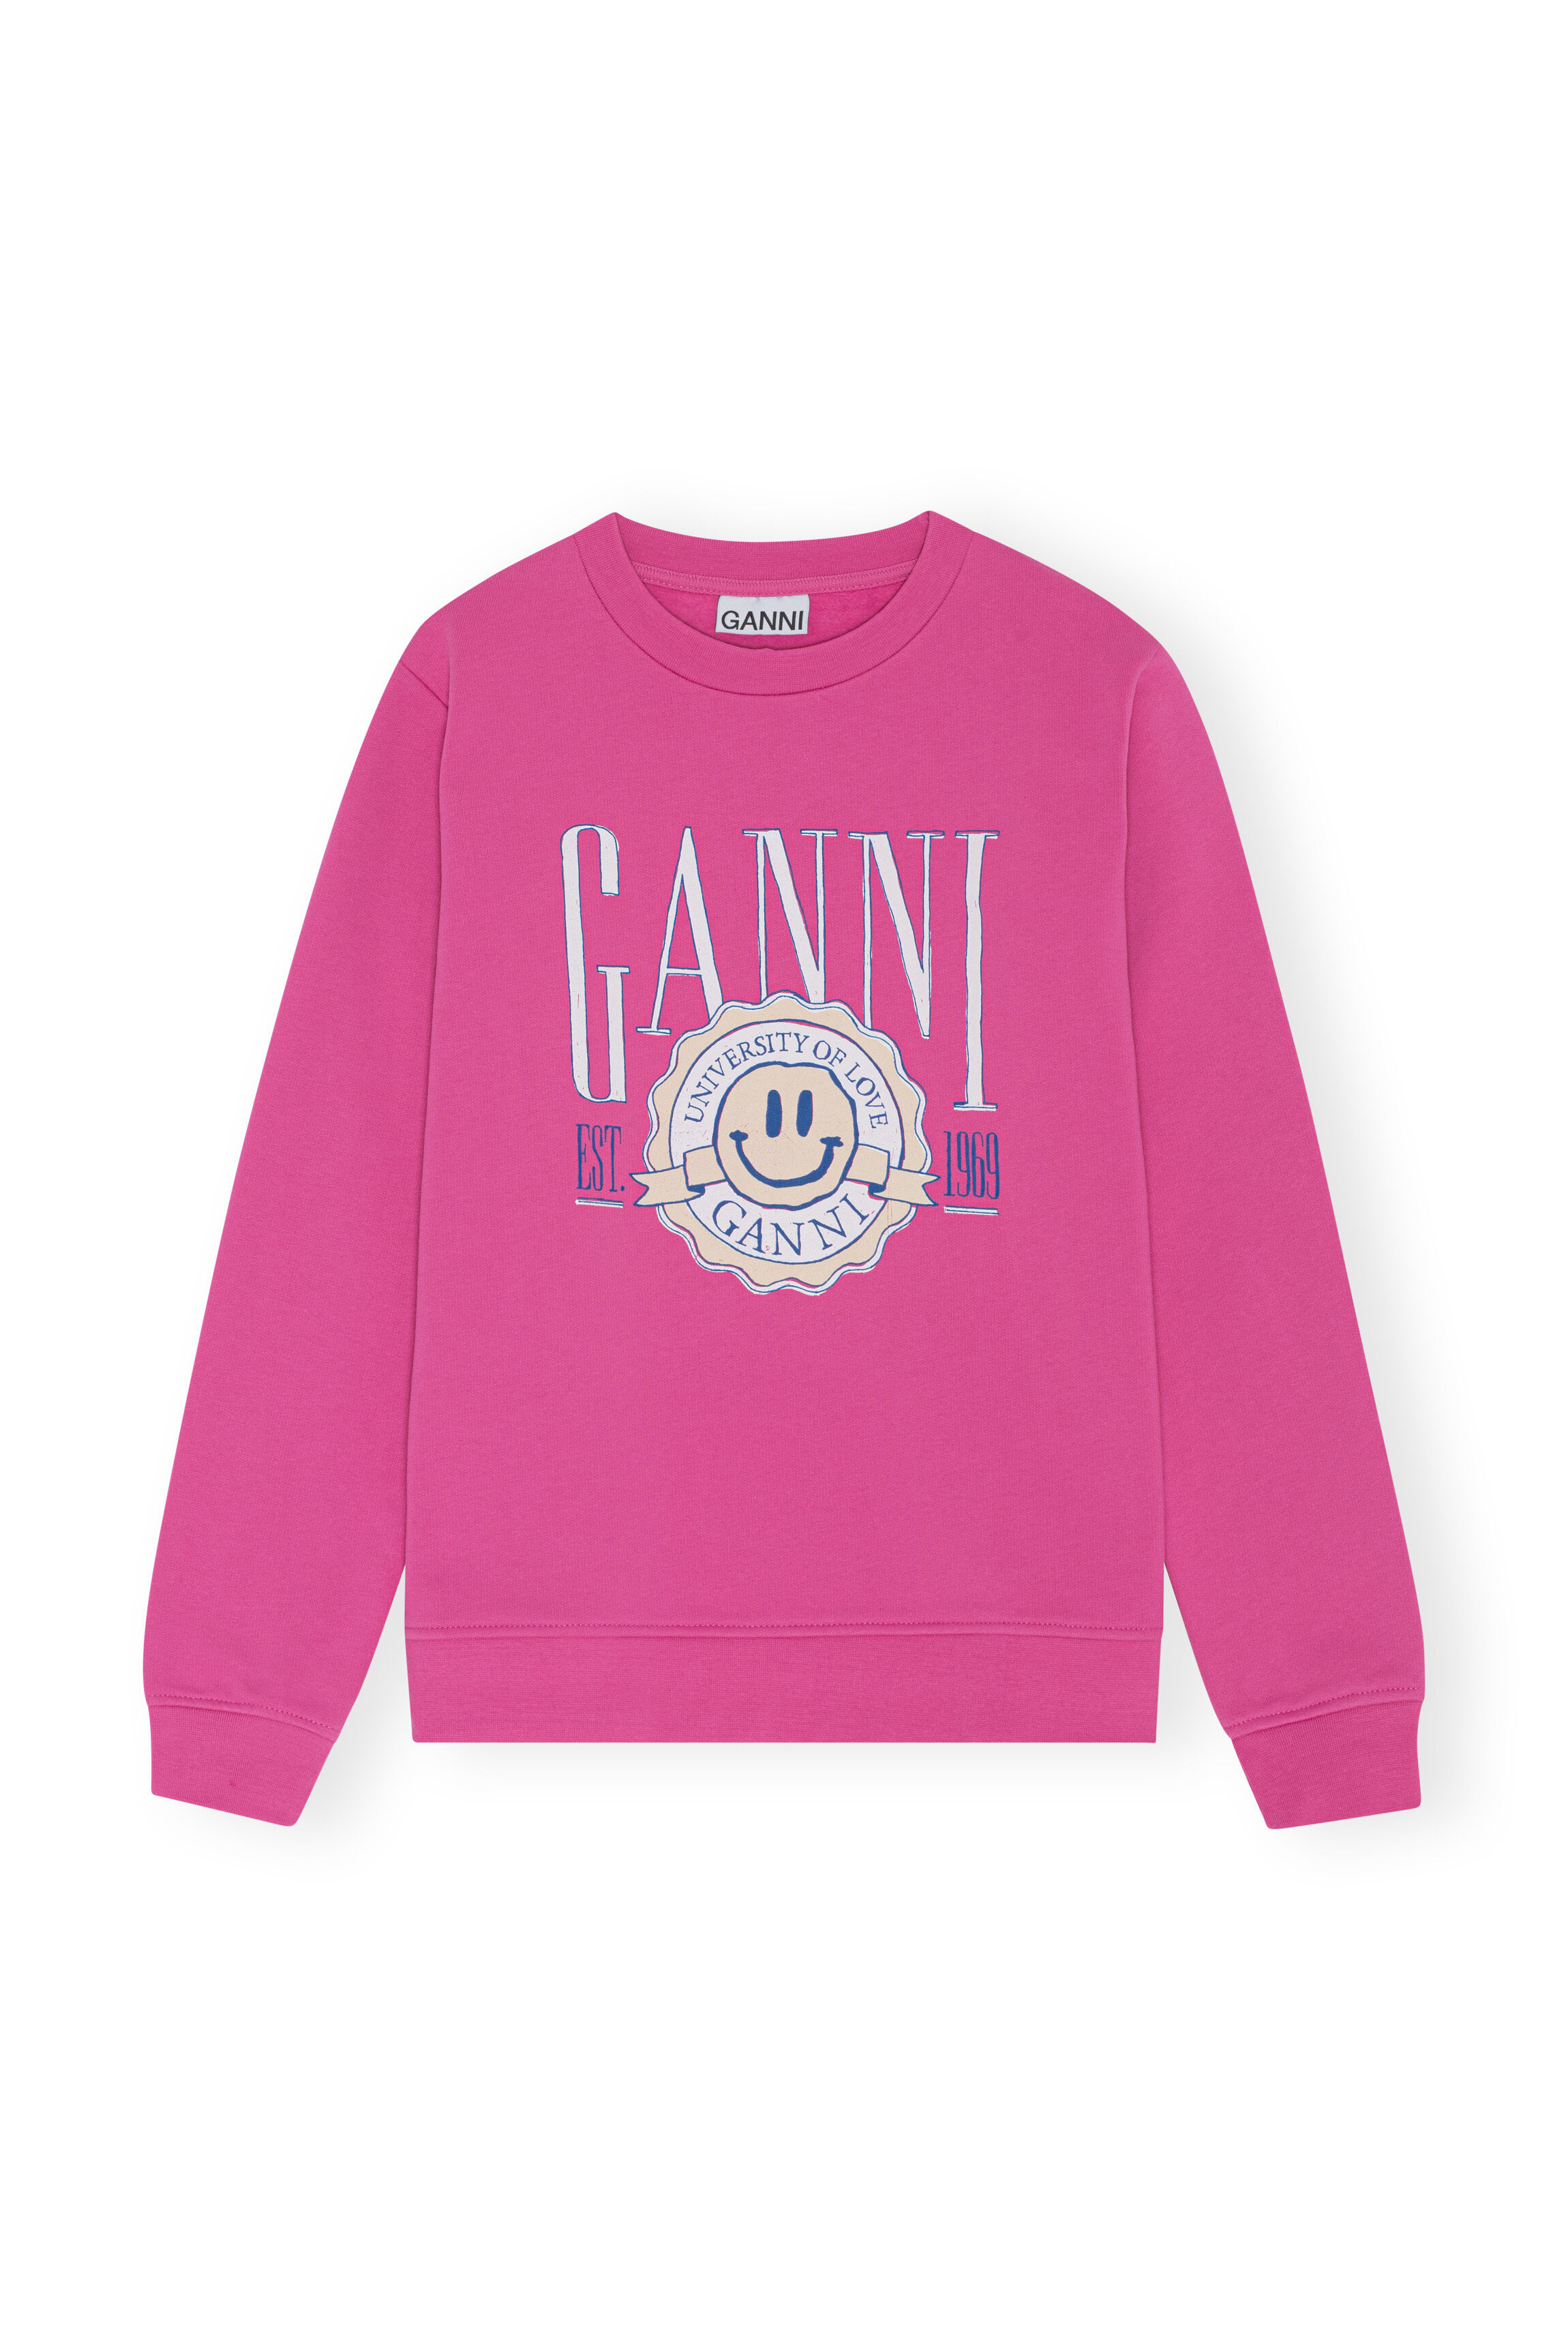 GANNI Exclusives | Online Exclusive Clothing | GANNI